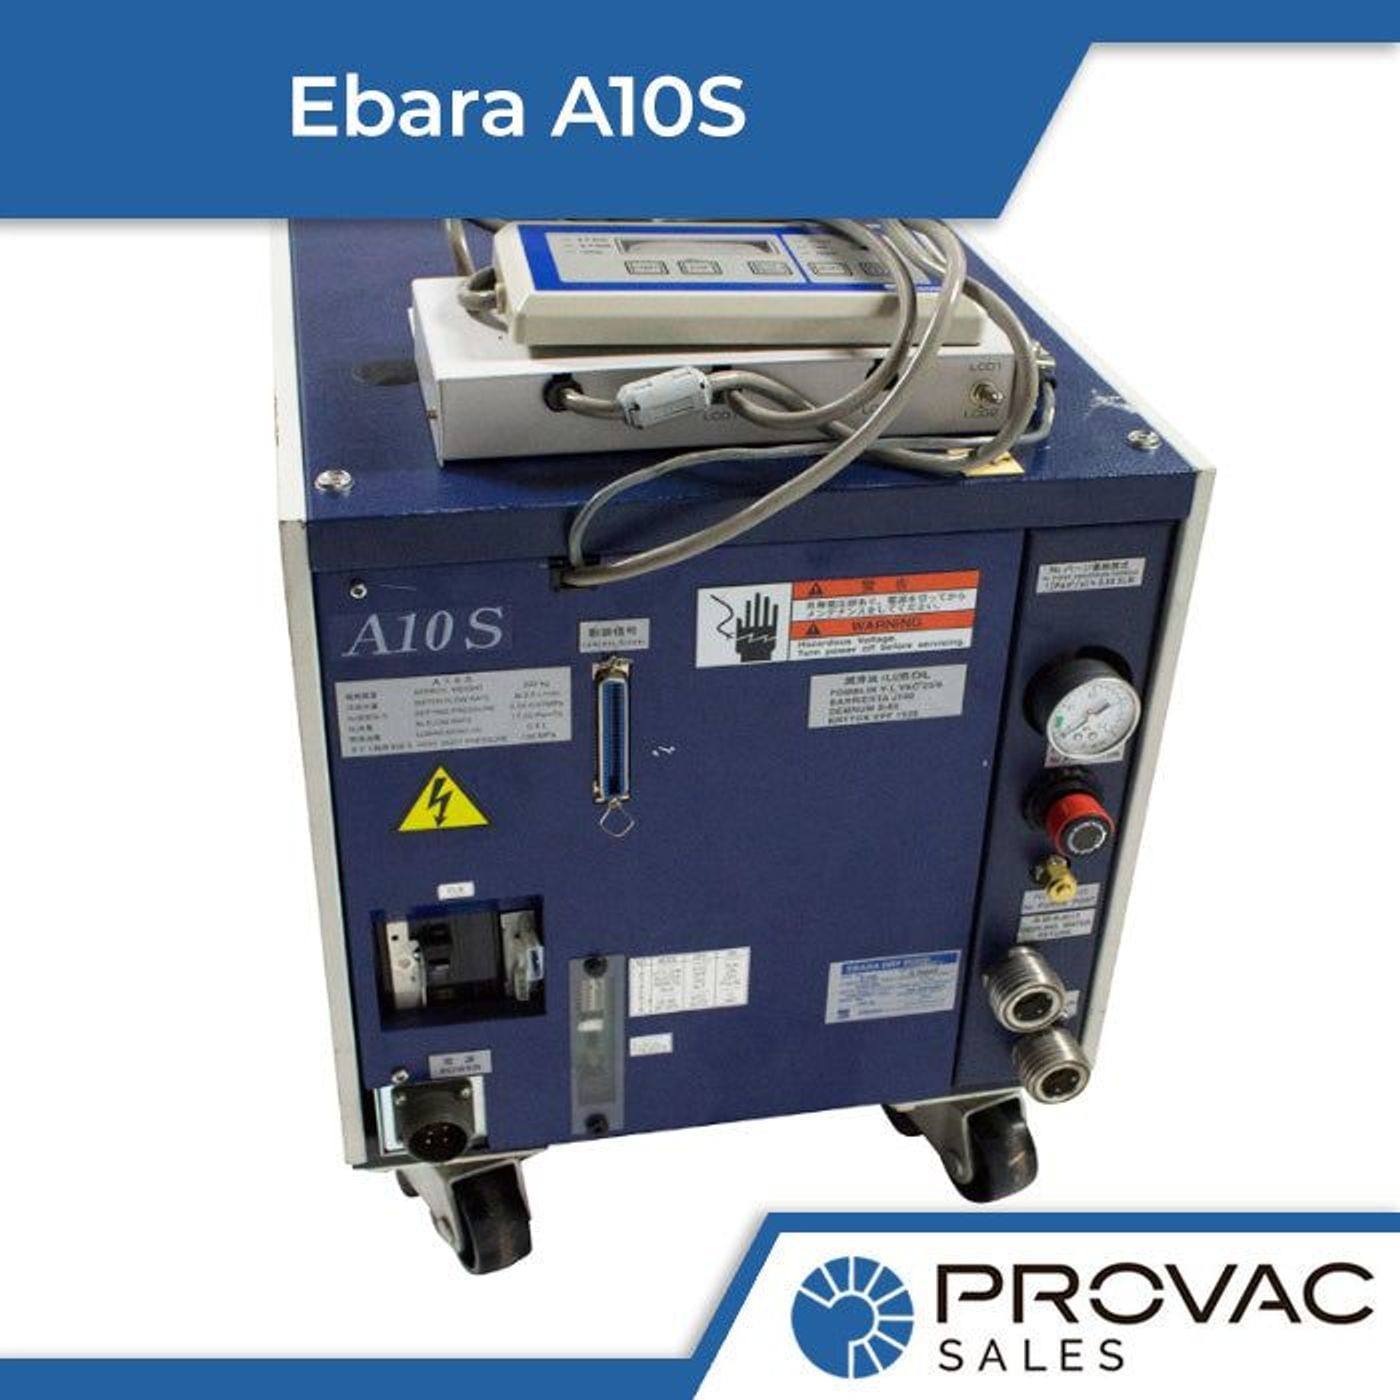 Product Spotlight: Ebara A10S Dry Pump